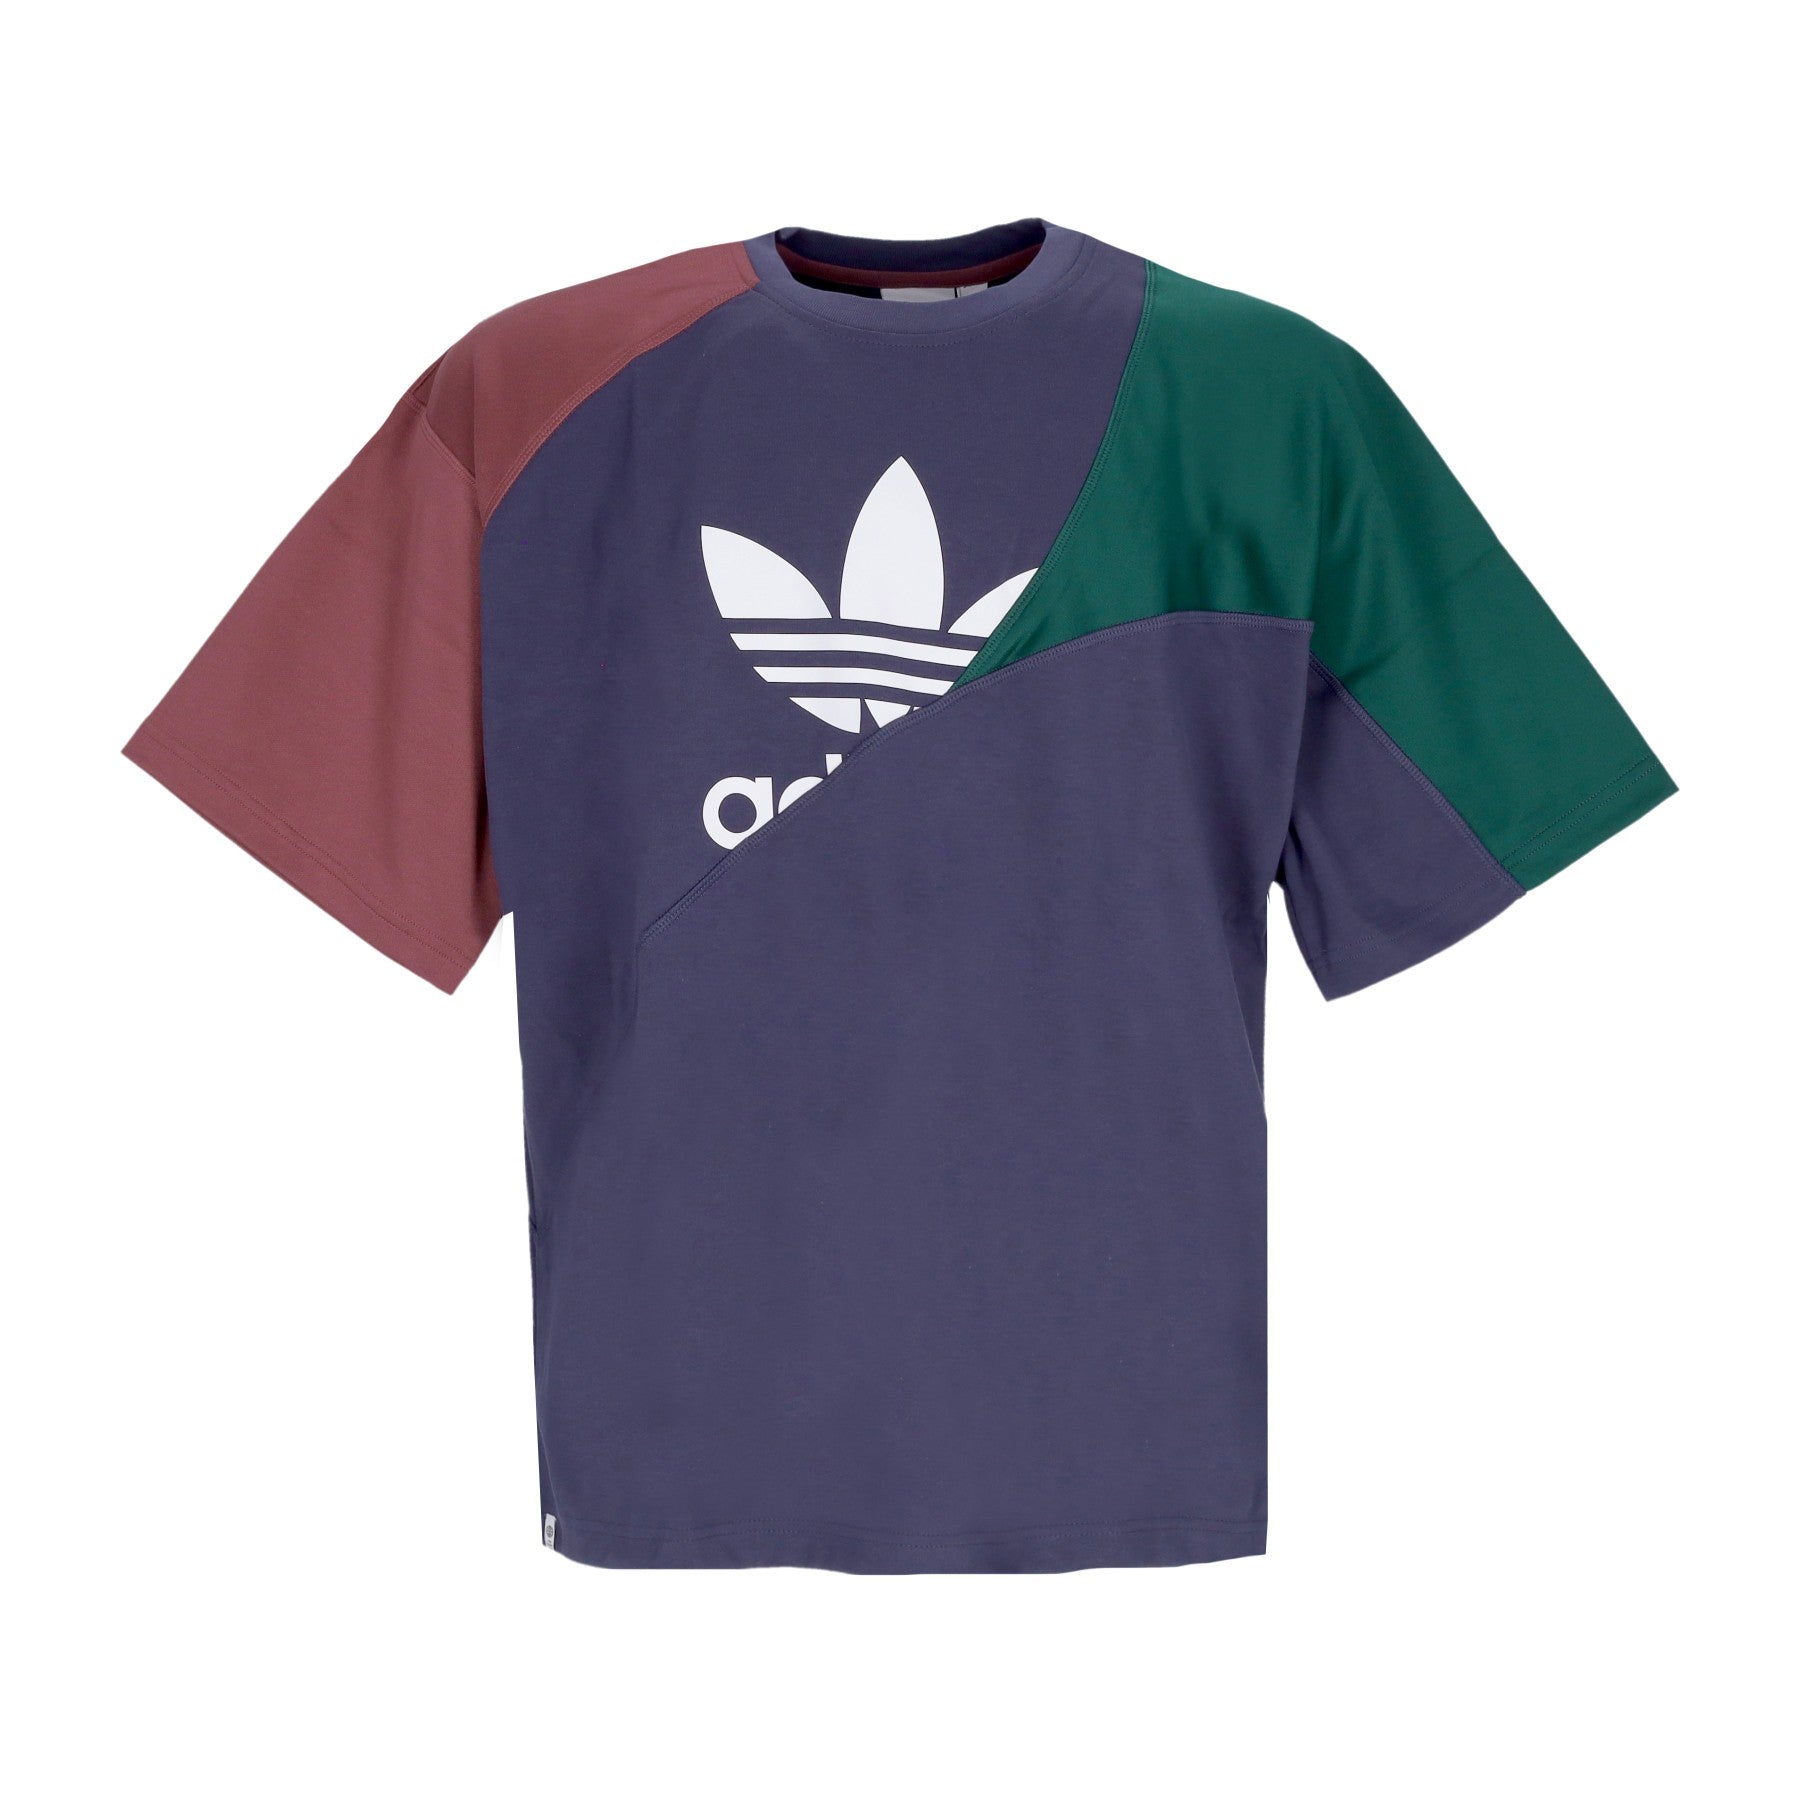 Adidas, Maglietta Uomo Bld Colorblack Tee, Shadow Navy/quiet Crimson/collegiate Green